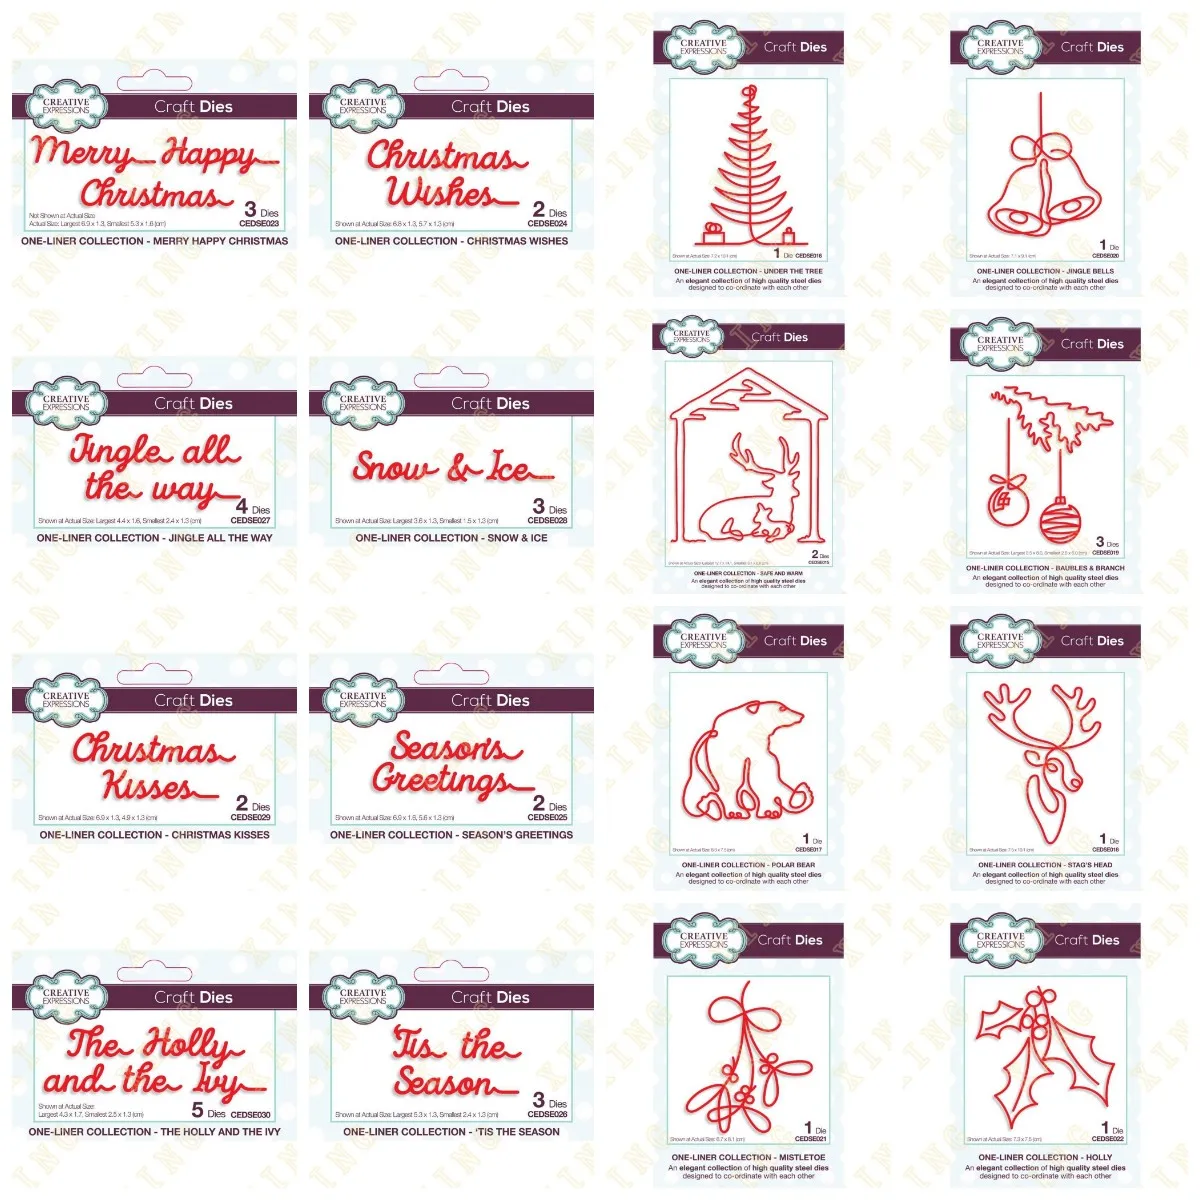 

New Merry Happy Christmas Tree Bear Stag's Head Baubles Bells Metal Cutting Die Scrapbook Embossed Paper Card Album Craft Make